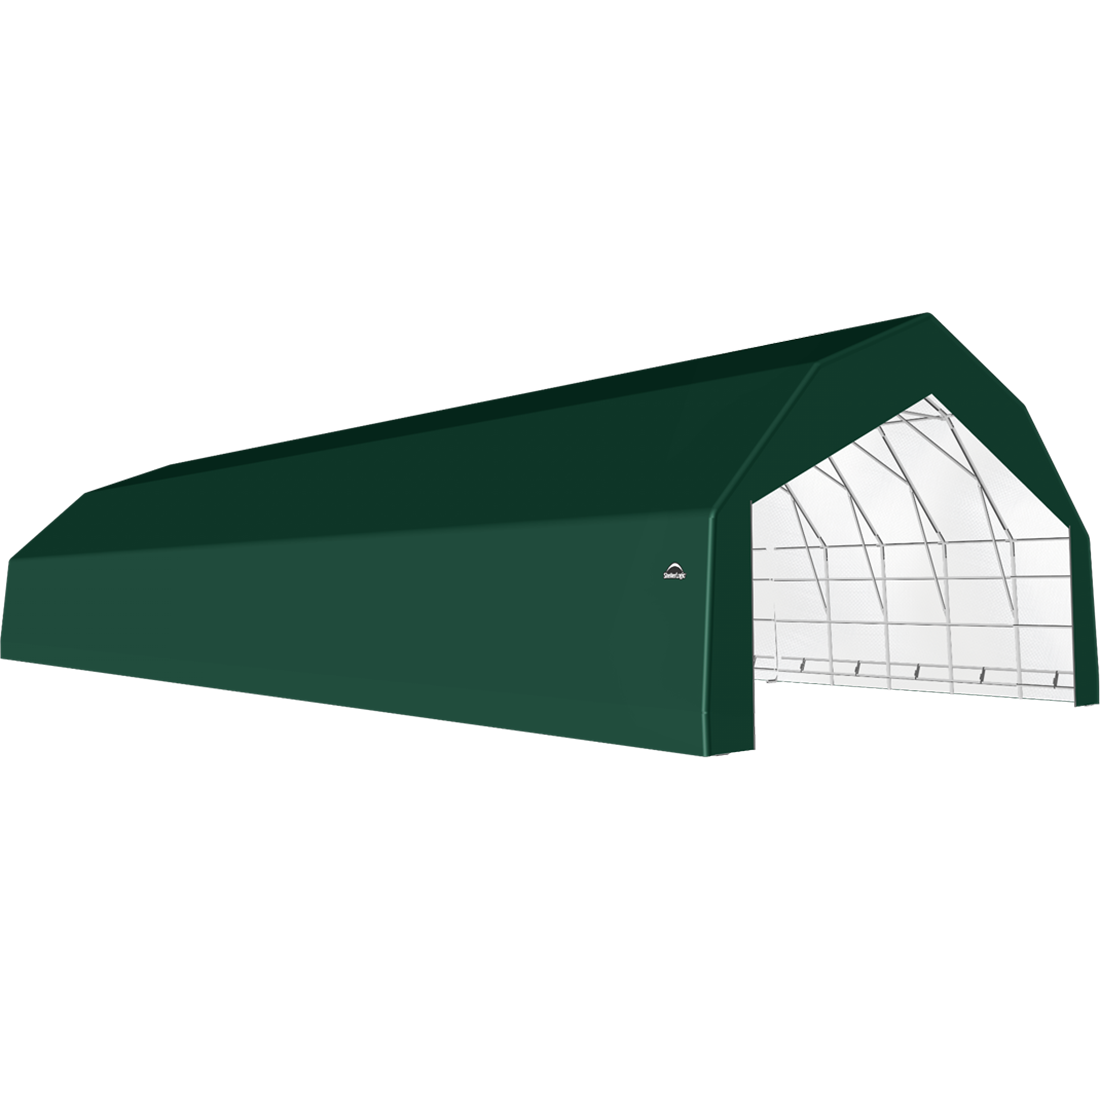 ShelterTech SP Series Barn Shelter, 30 ft. x 76 ft. x 18 ft. Heavy Duty PVC 14.5 oz. Green